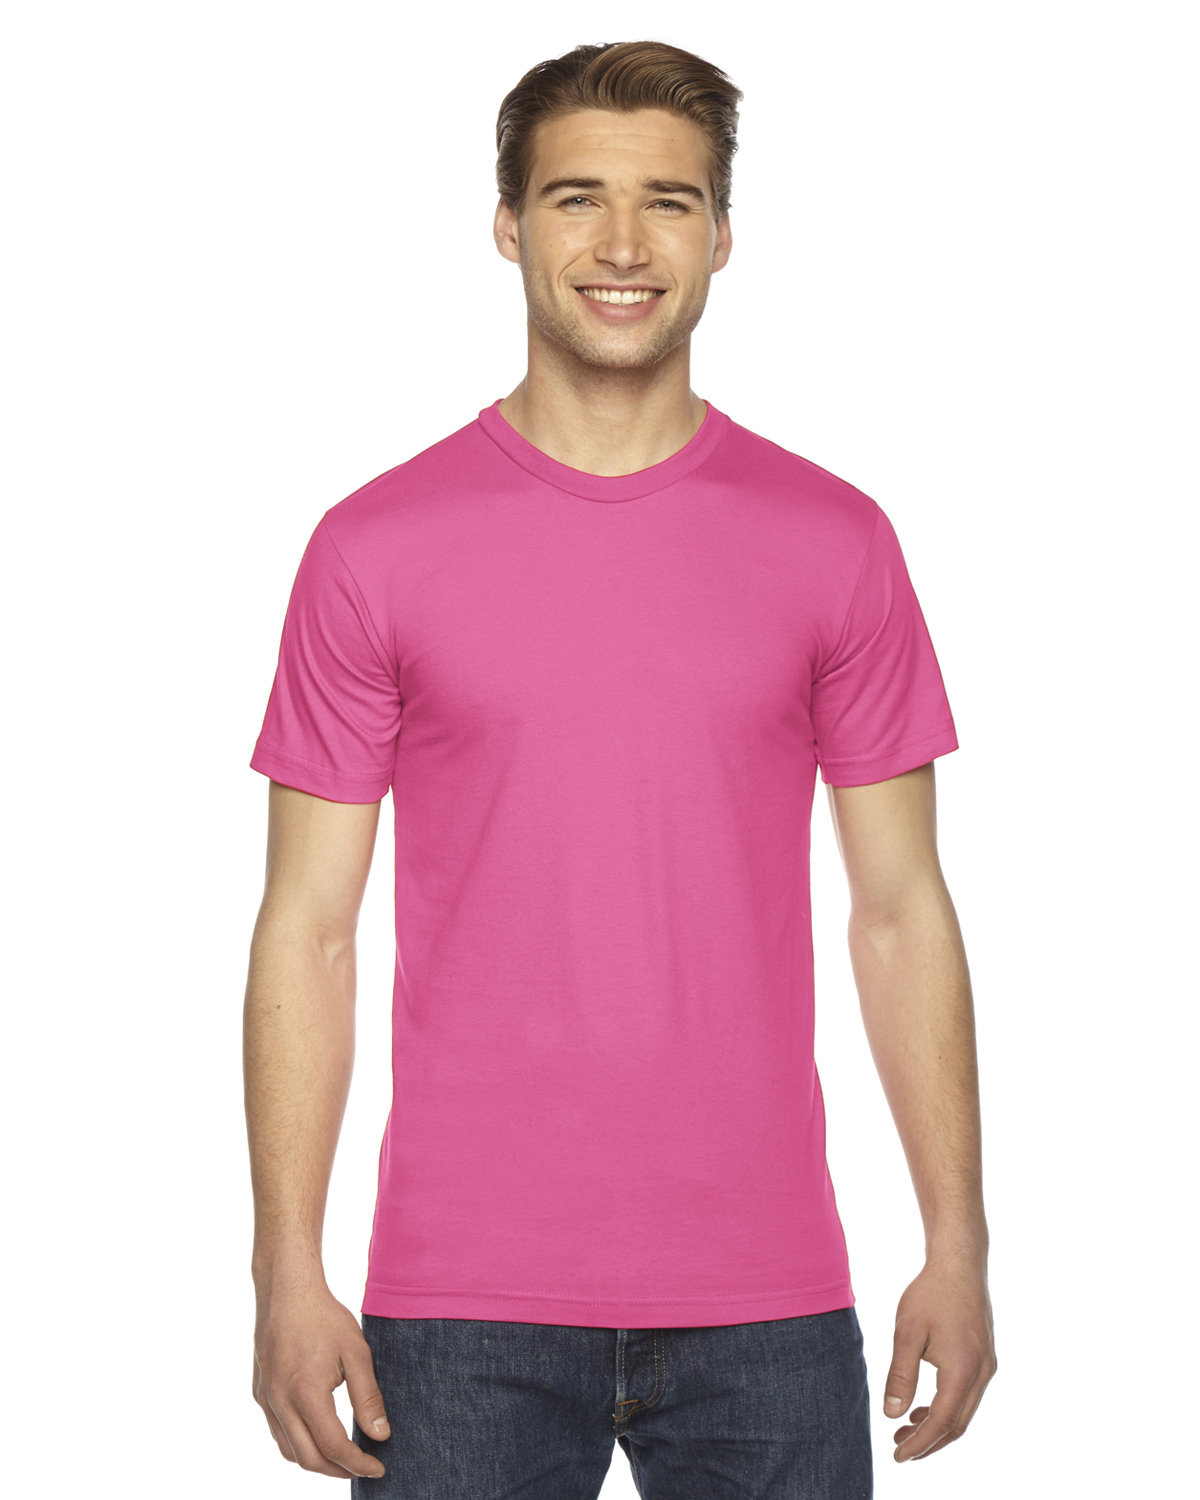 American Apparel Unisex Fine Jersey Short-Sleeve T-Shirt FUCHSIA 